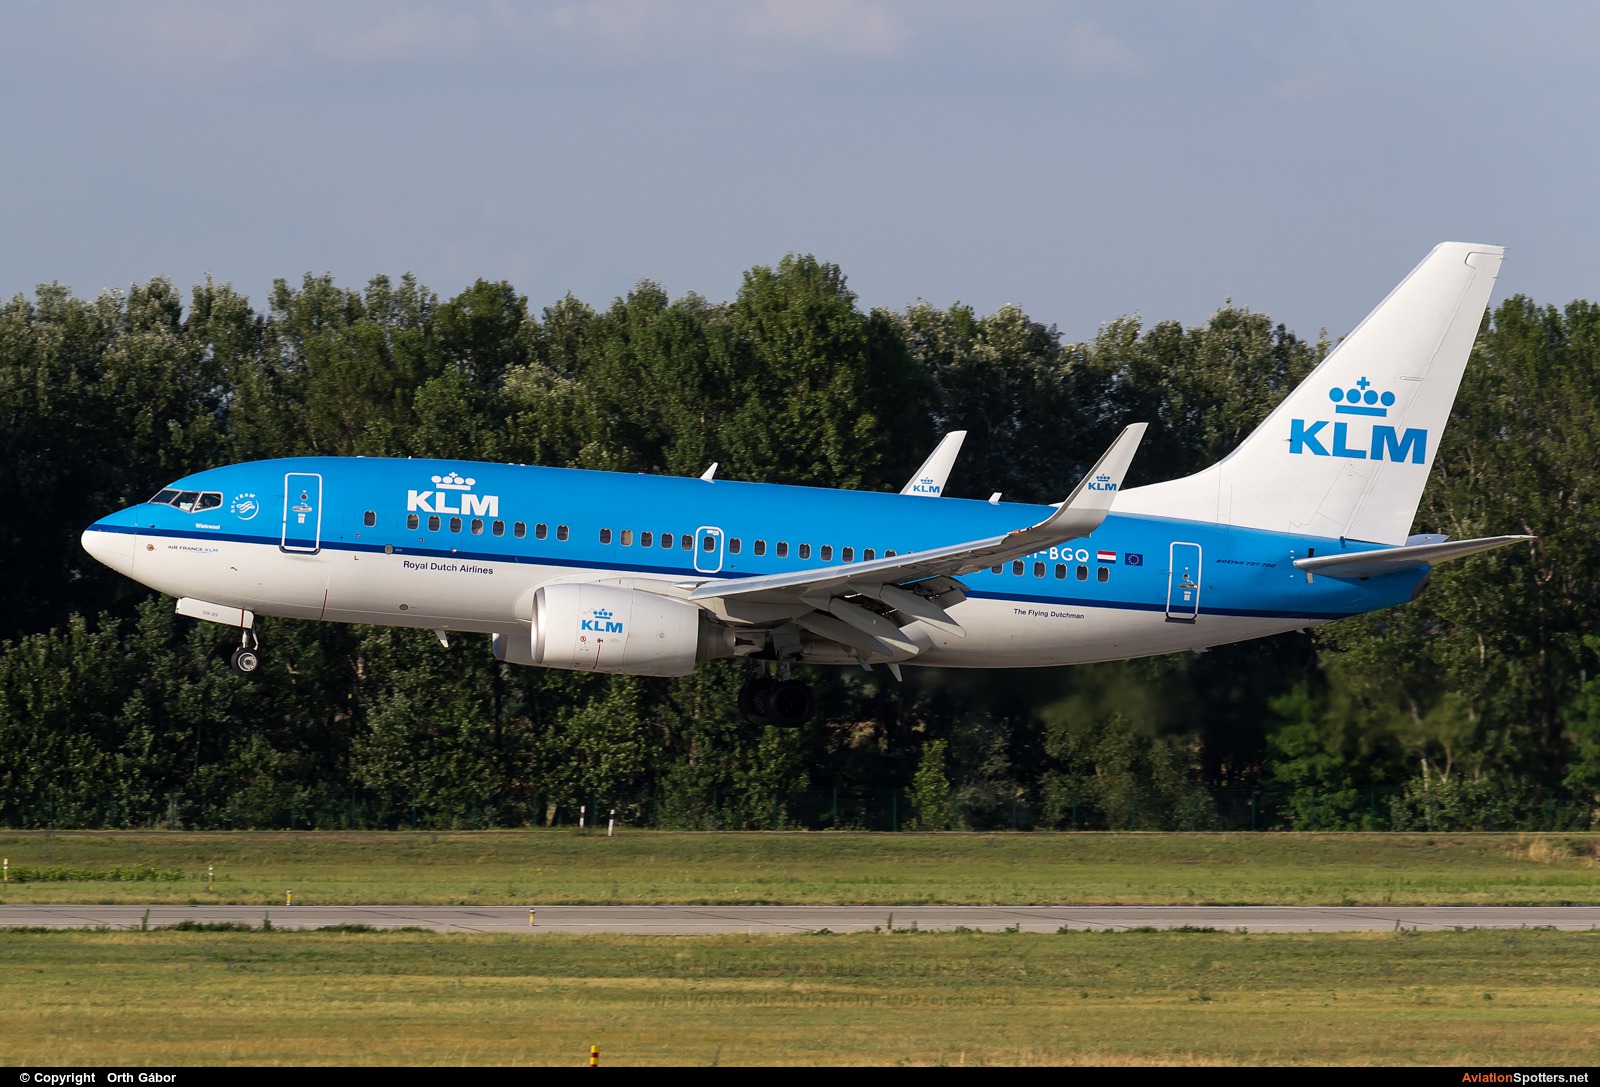 KLM  -  737-600  (PH-BGQ) By Orth Gábor (Roodkop)